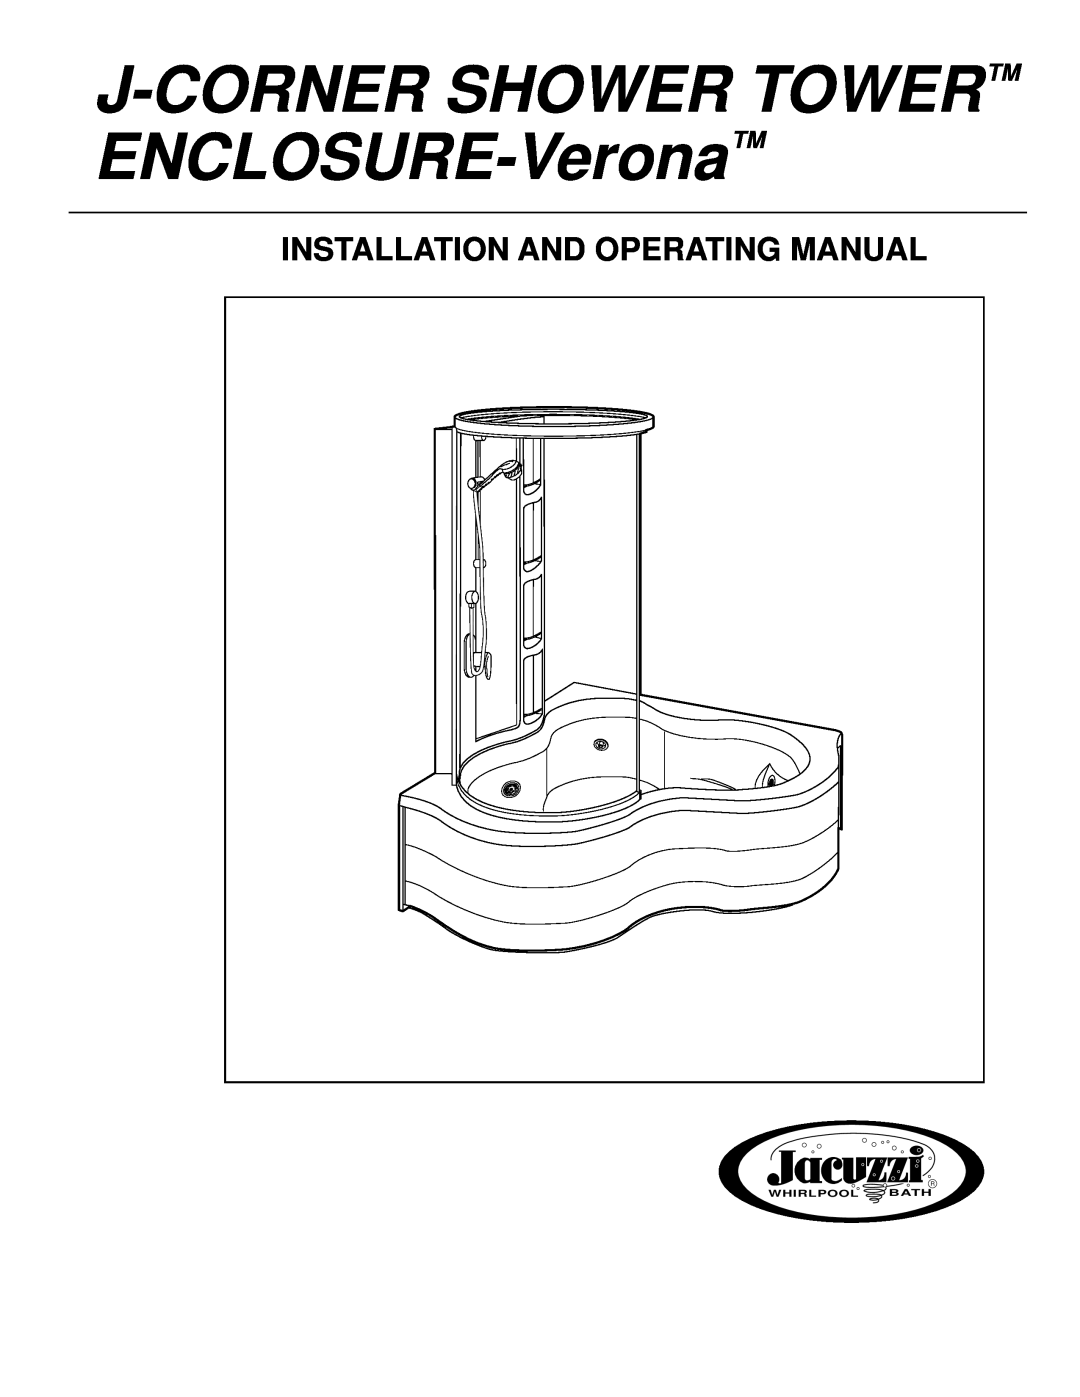 Jacuzzi F258000 manual J-CORNERSHOWER TOWER ENCLOSURE-Verona, Installation And Operating Manual, Whirlpool Bath 